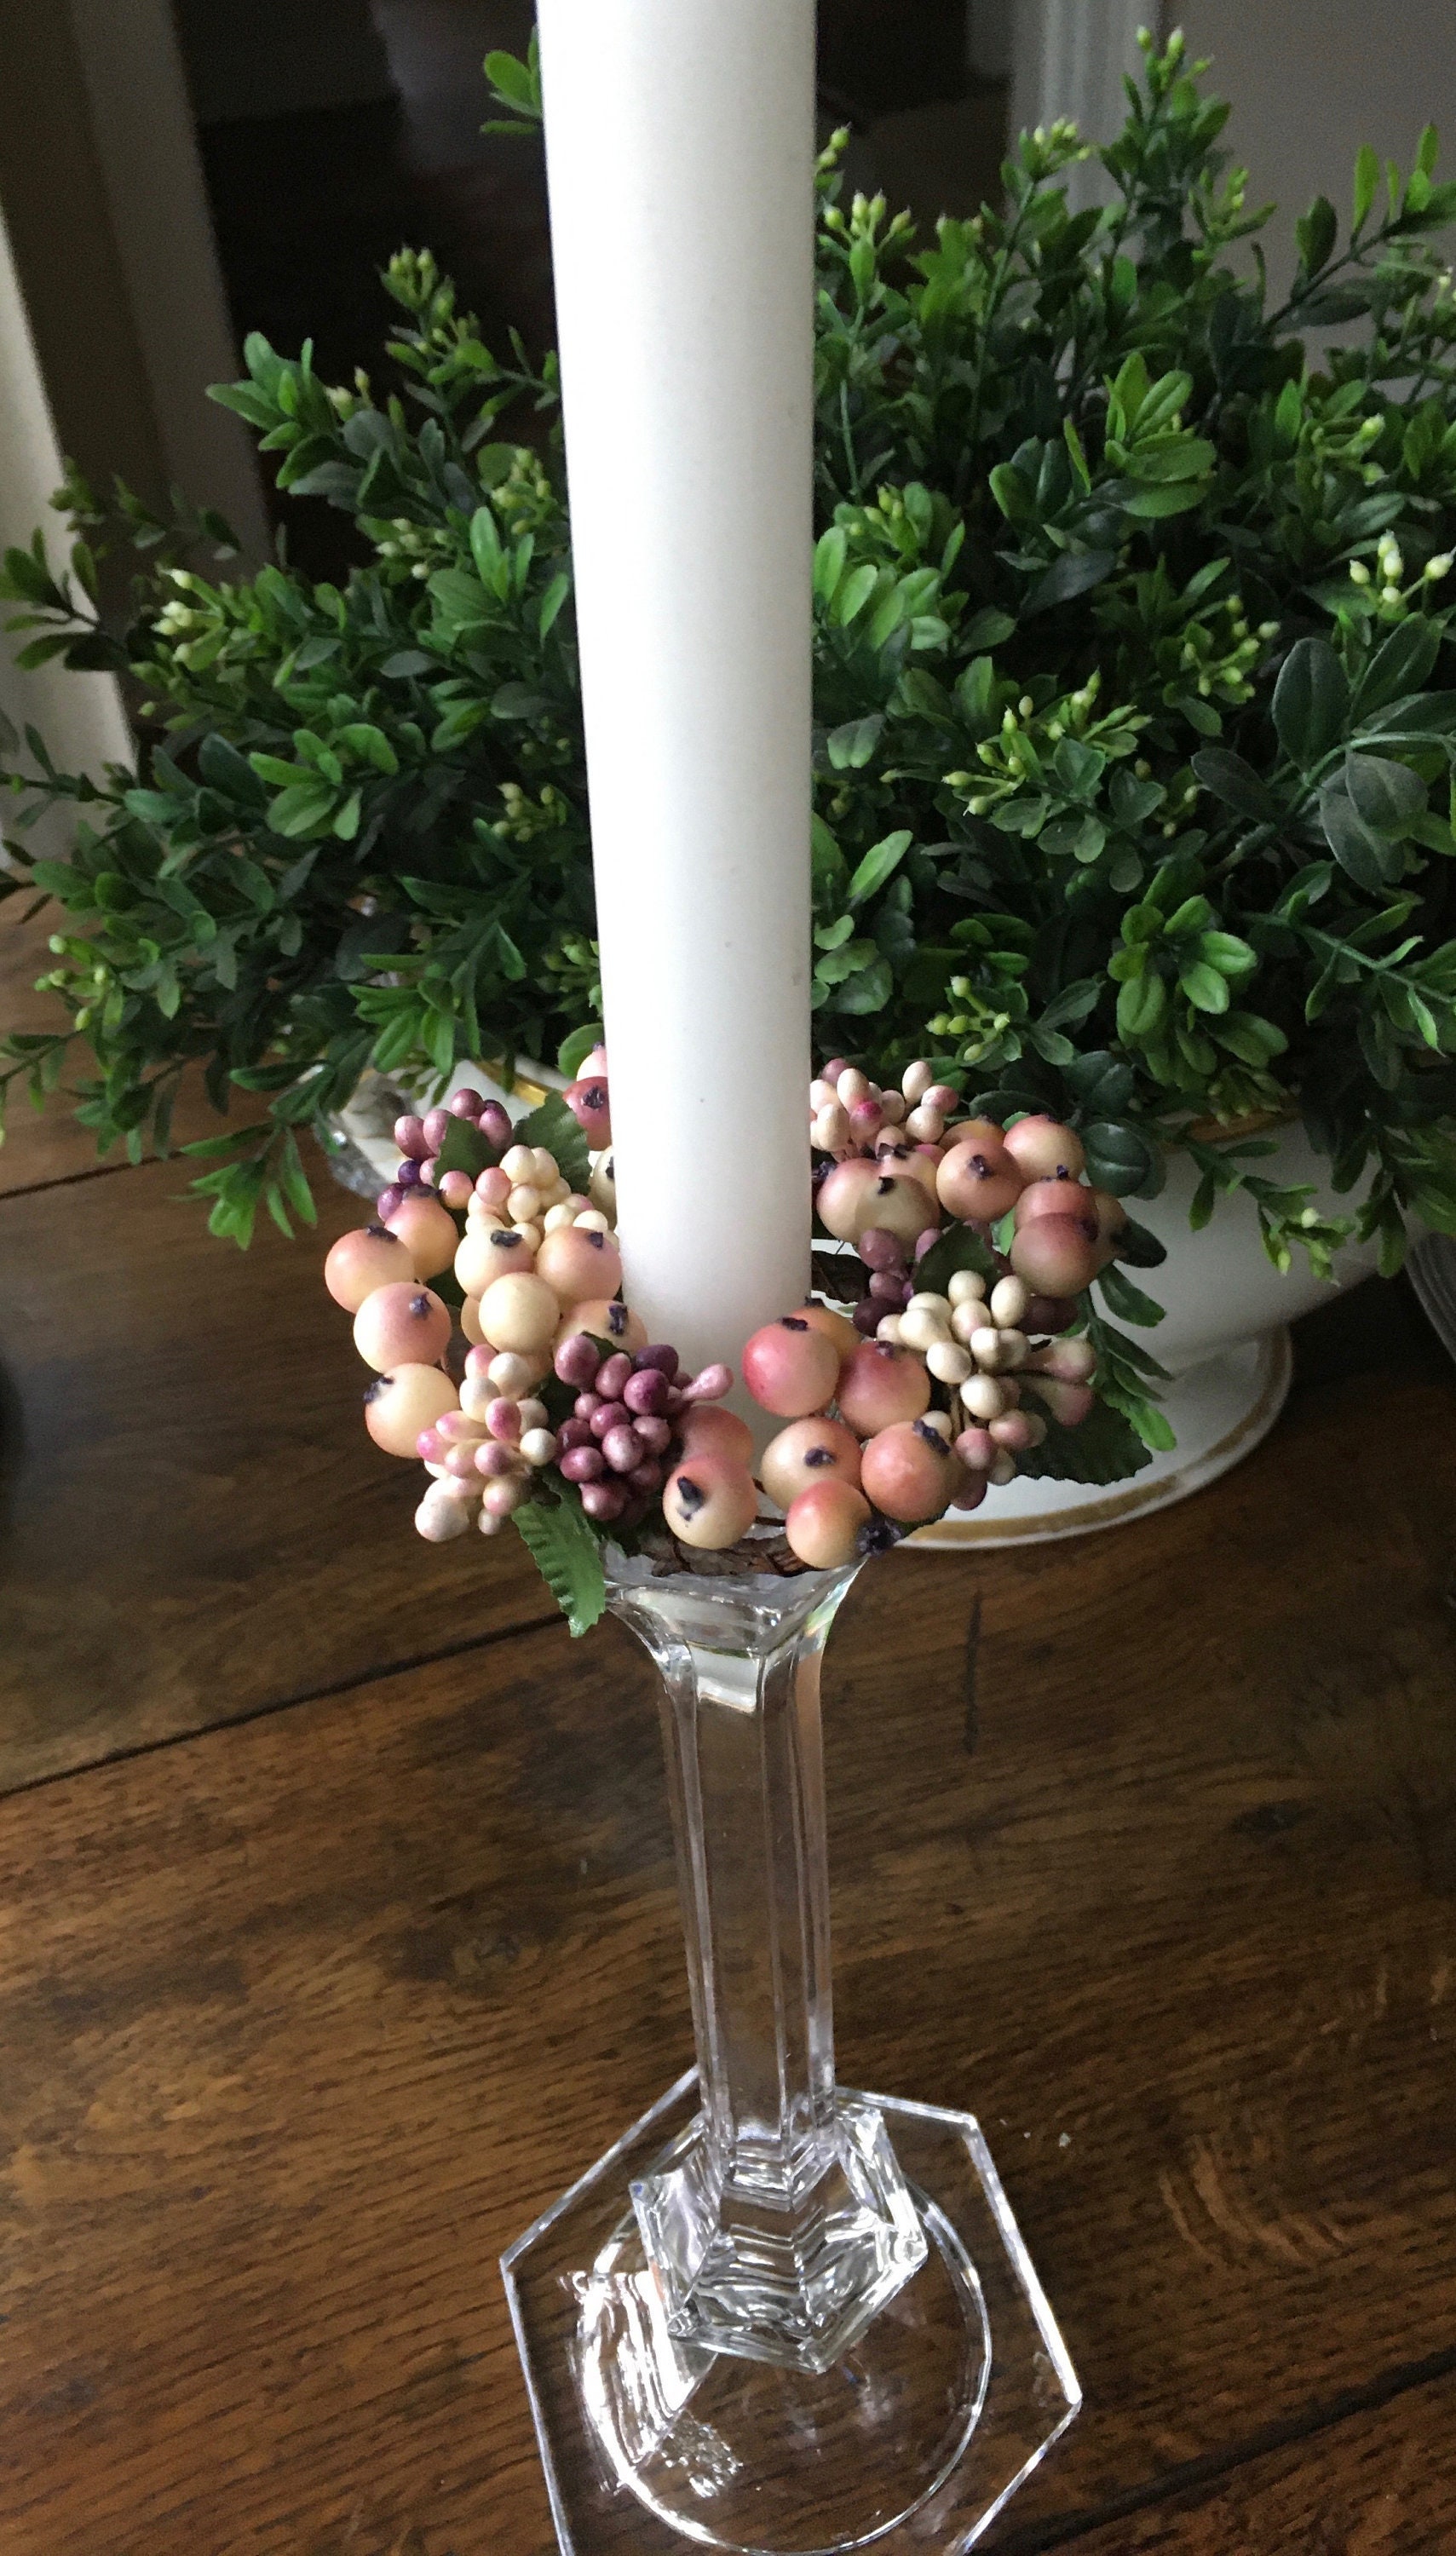 Wild Blueberries Pillar Candle, Hobby Lobby